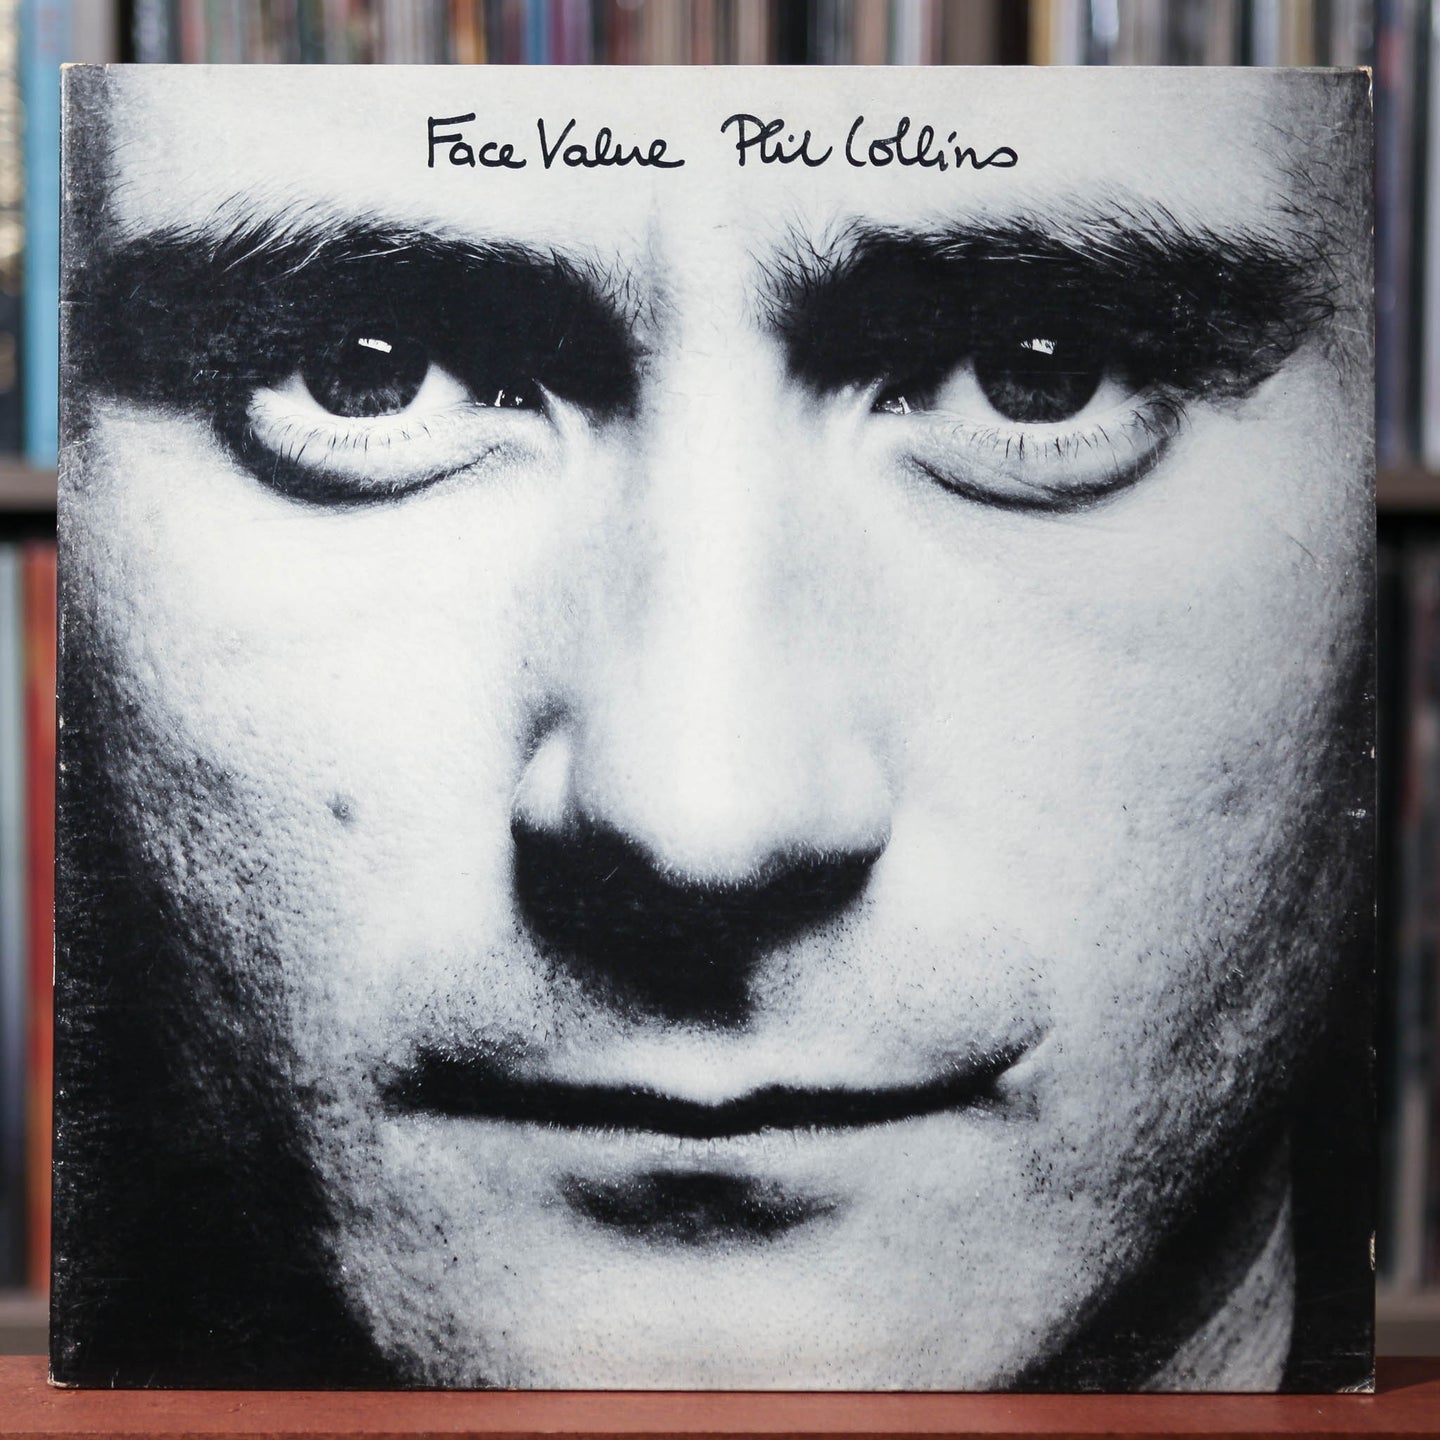 Phil Collins - Face Value - 1981 Atlantic, VG+/VG+